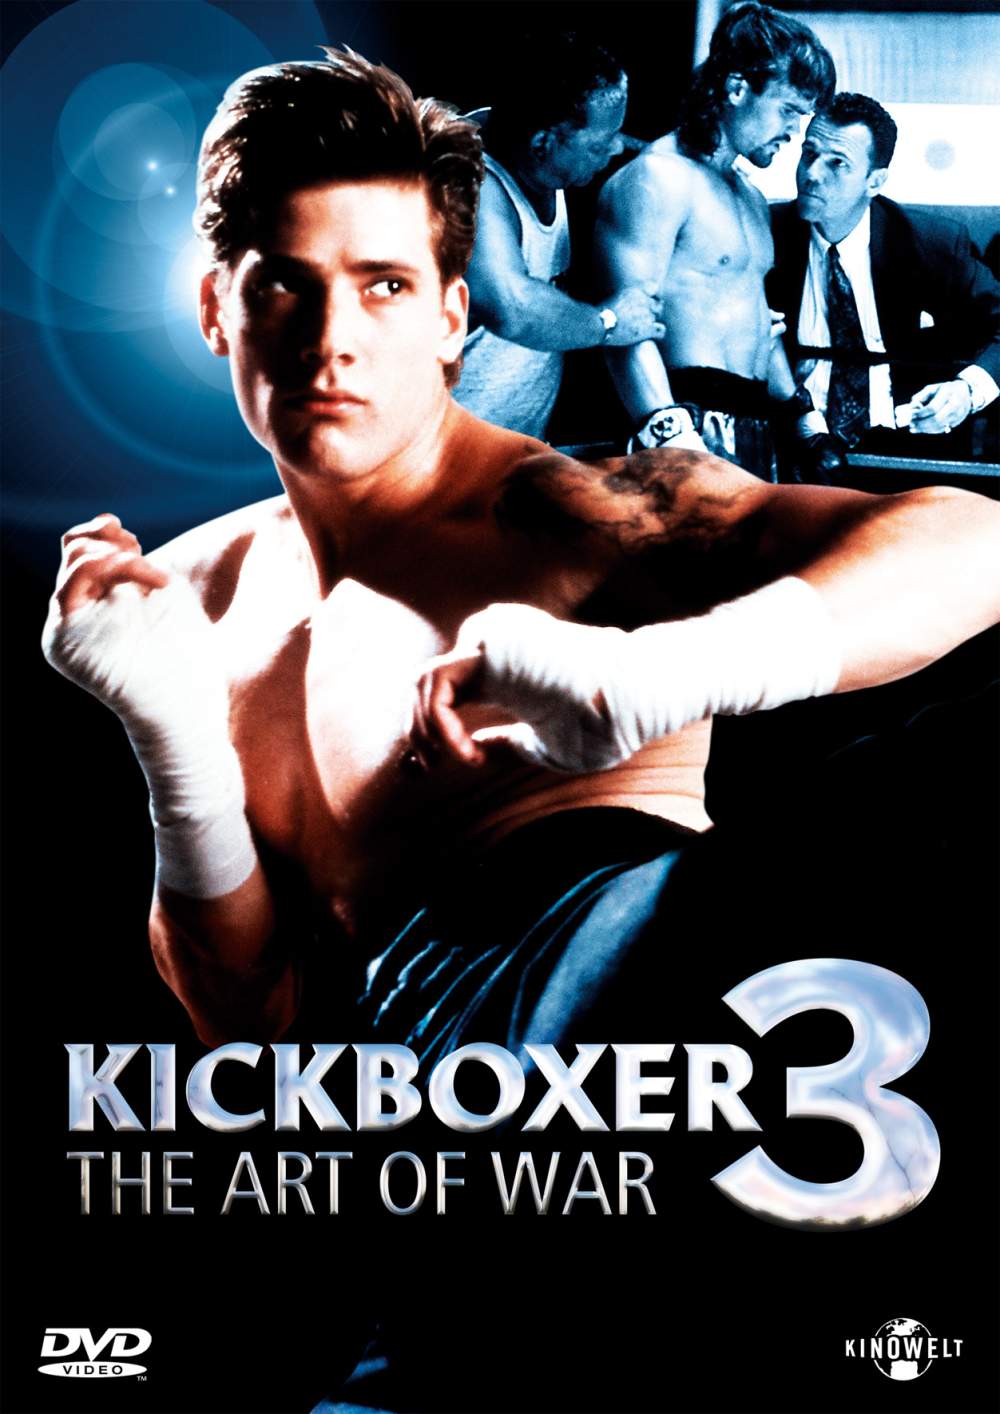 Kickboxer3 